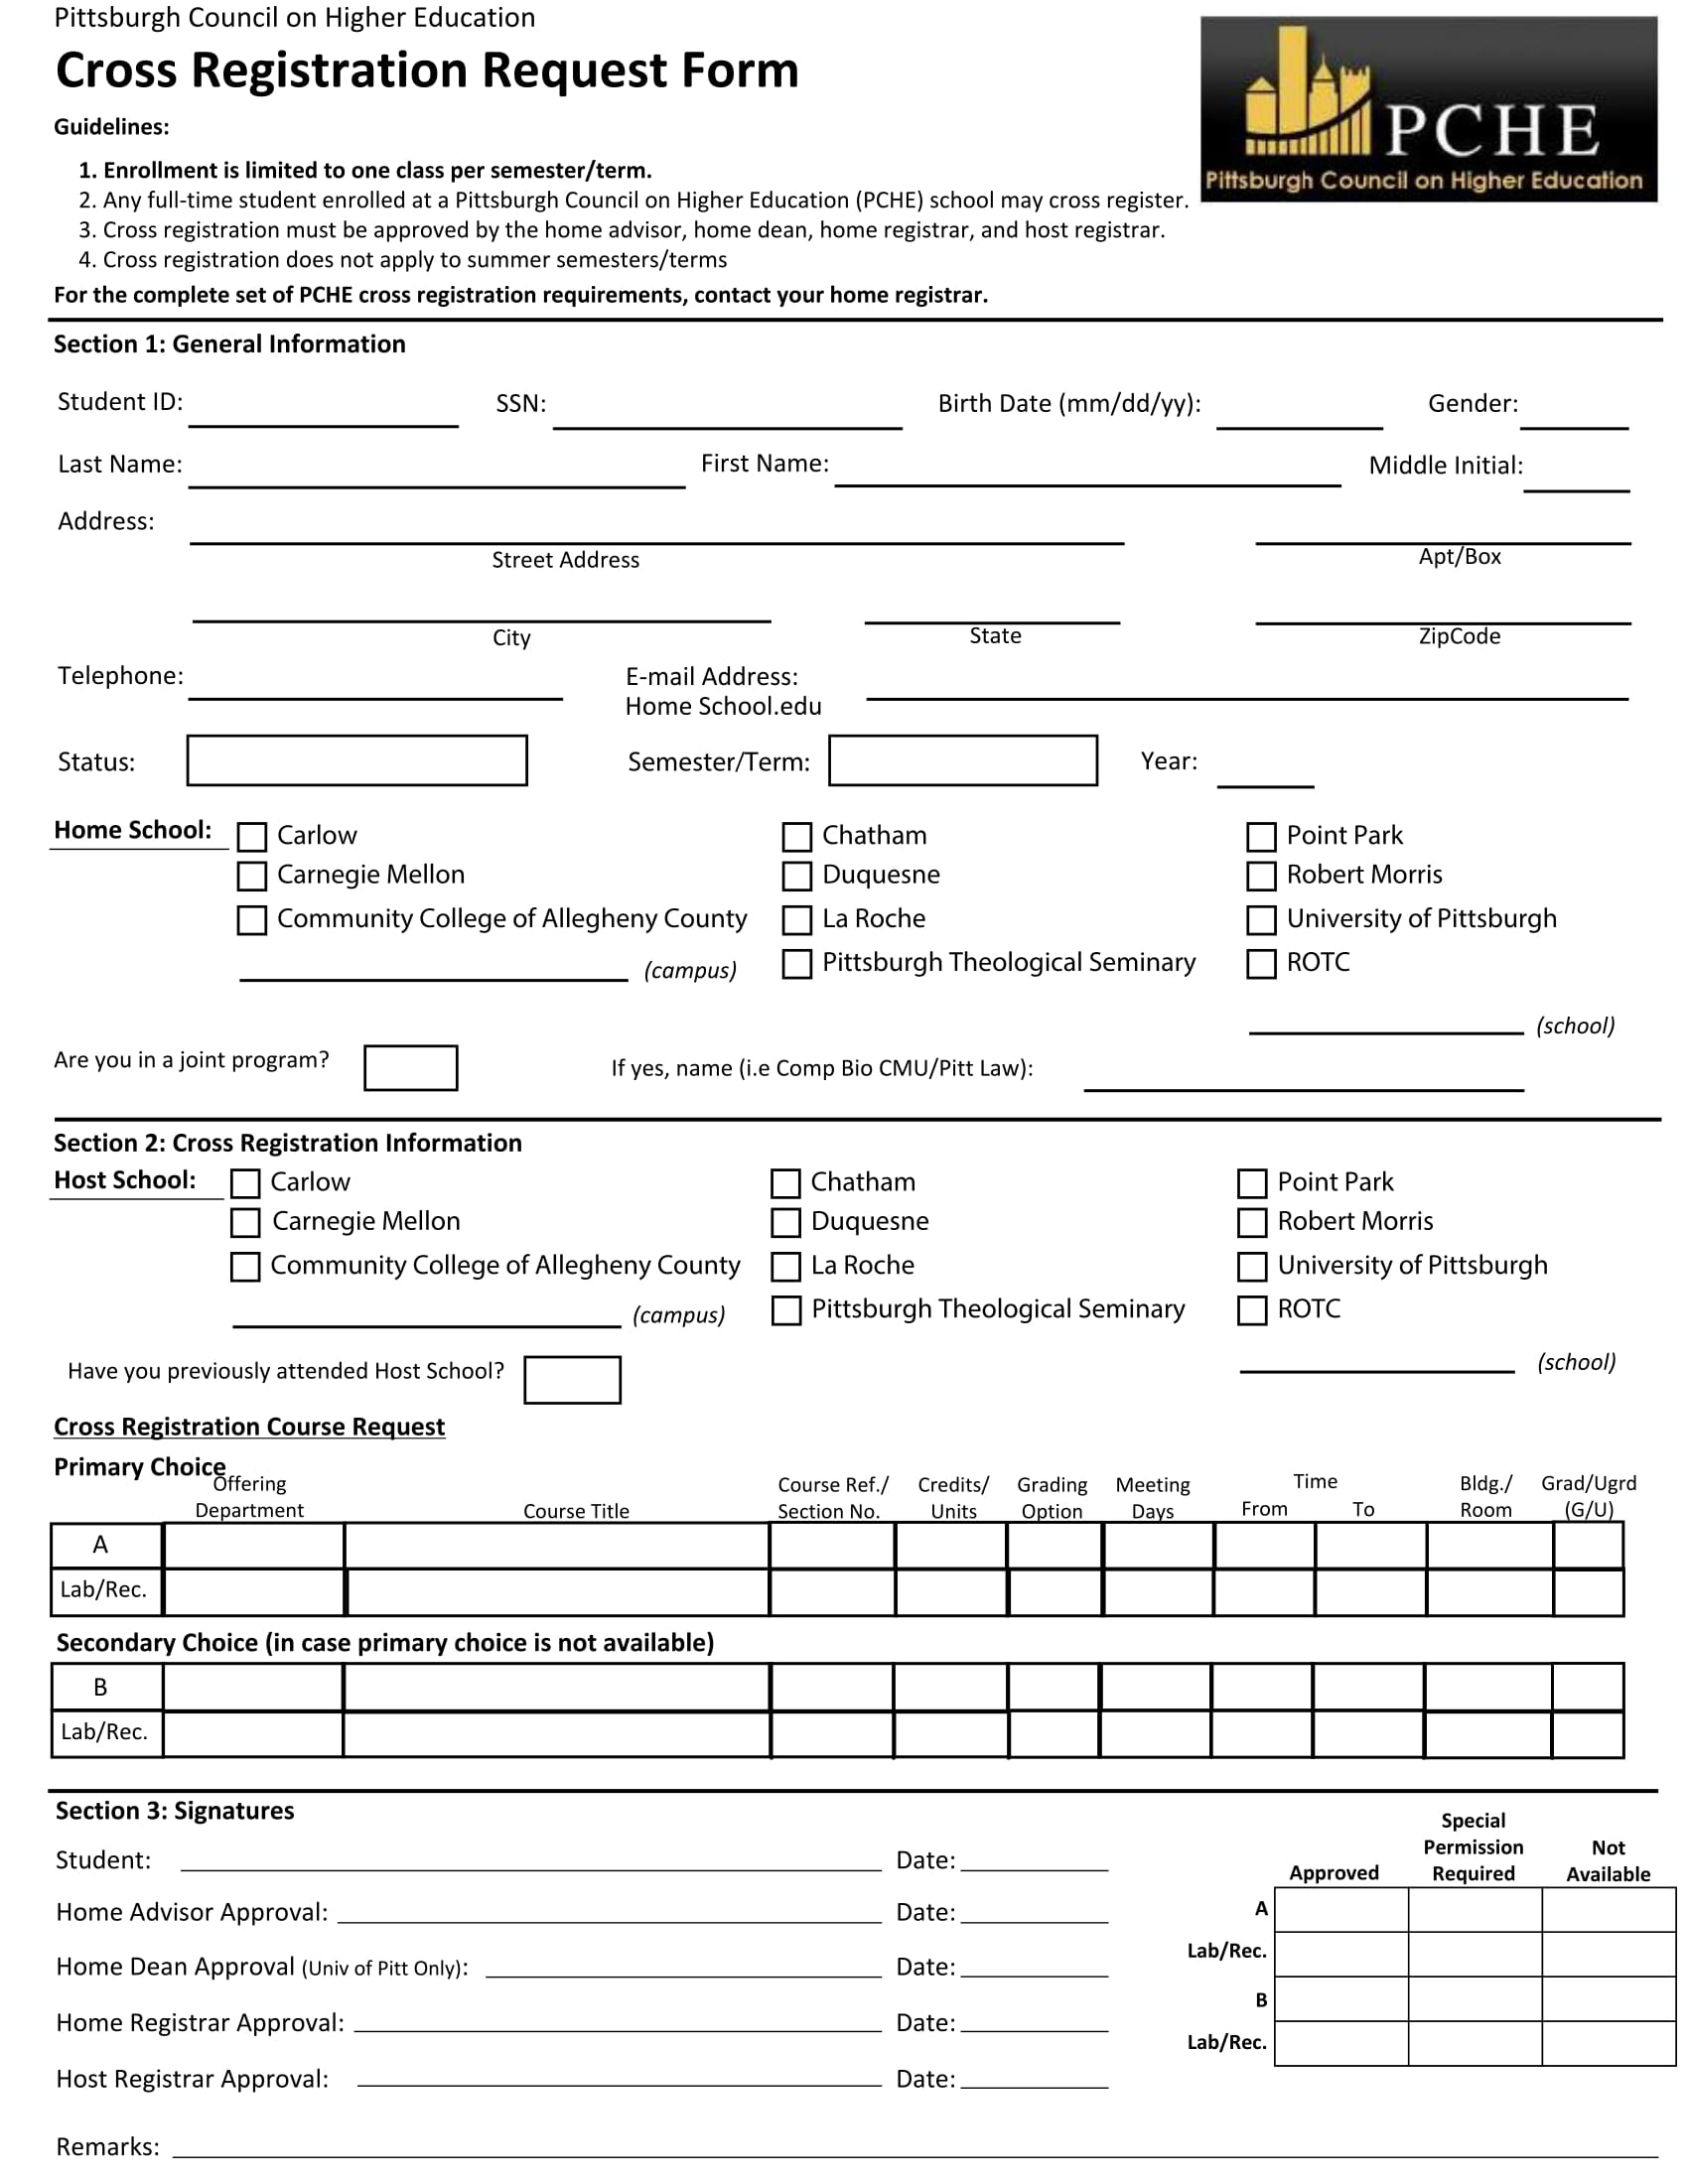 cross registration request form 1